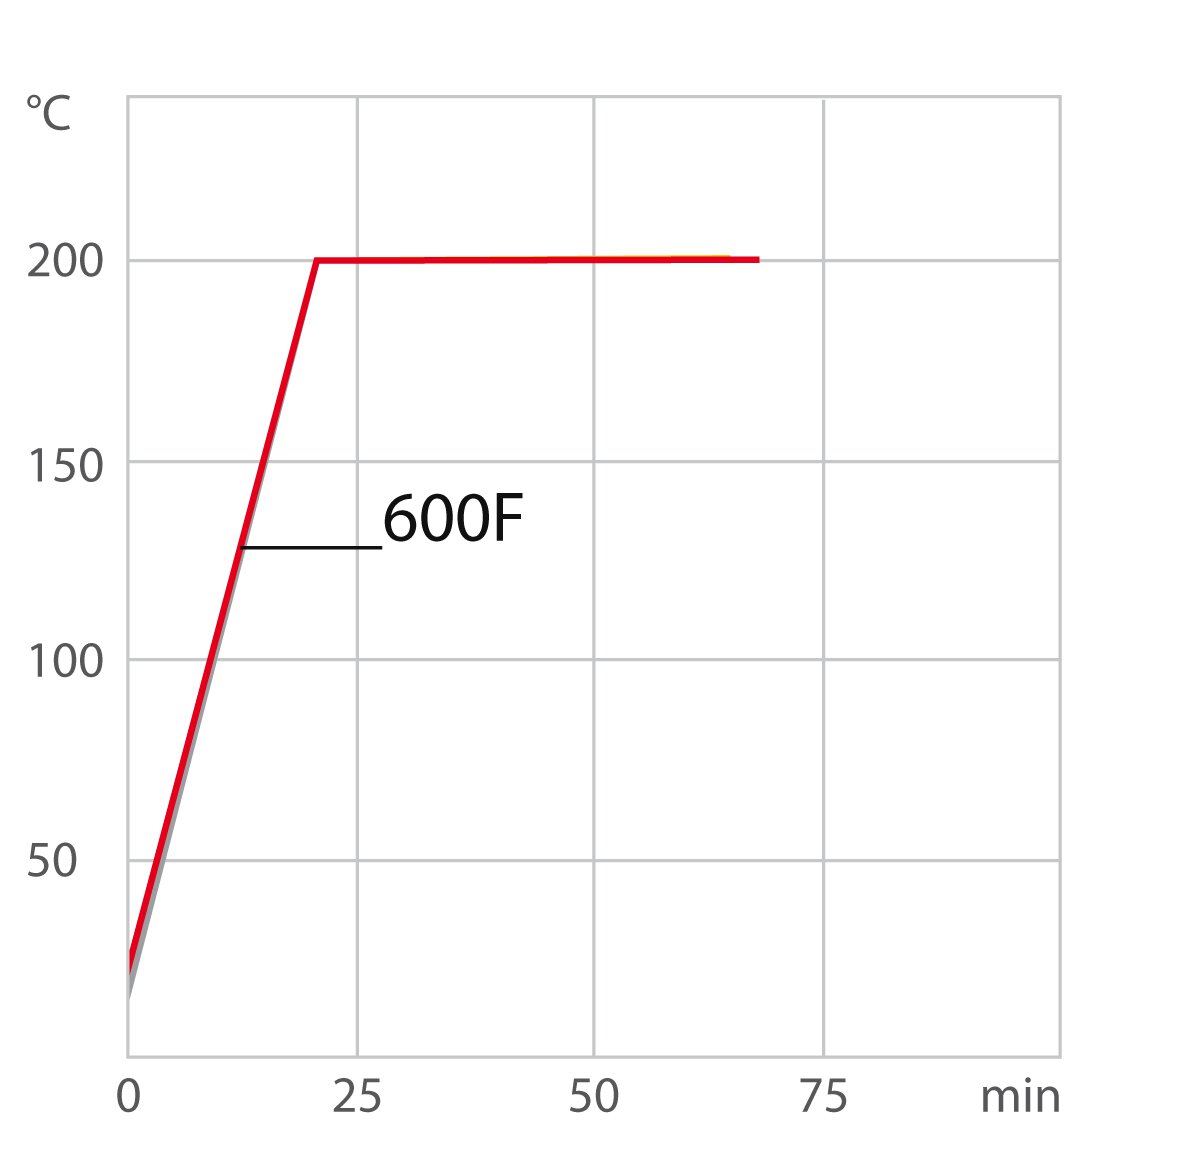 Heating curve refrigerated circulator / thermostat de laboratoire 600F